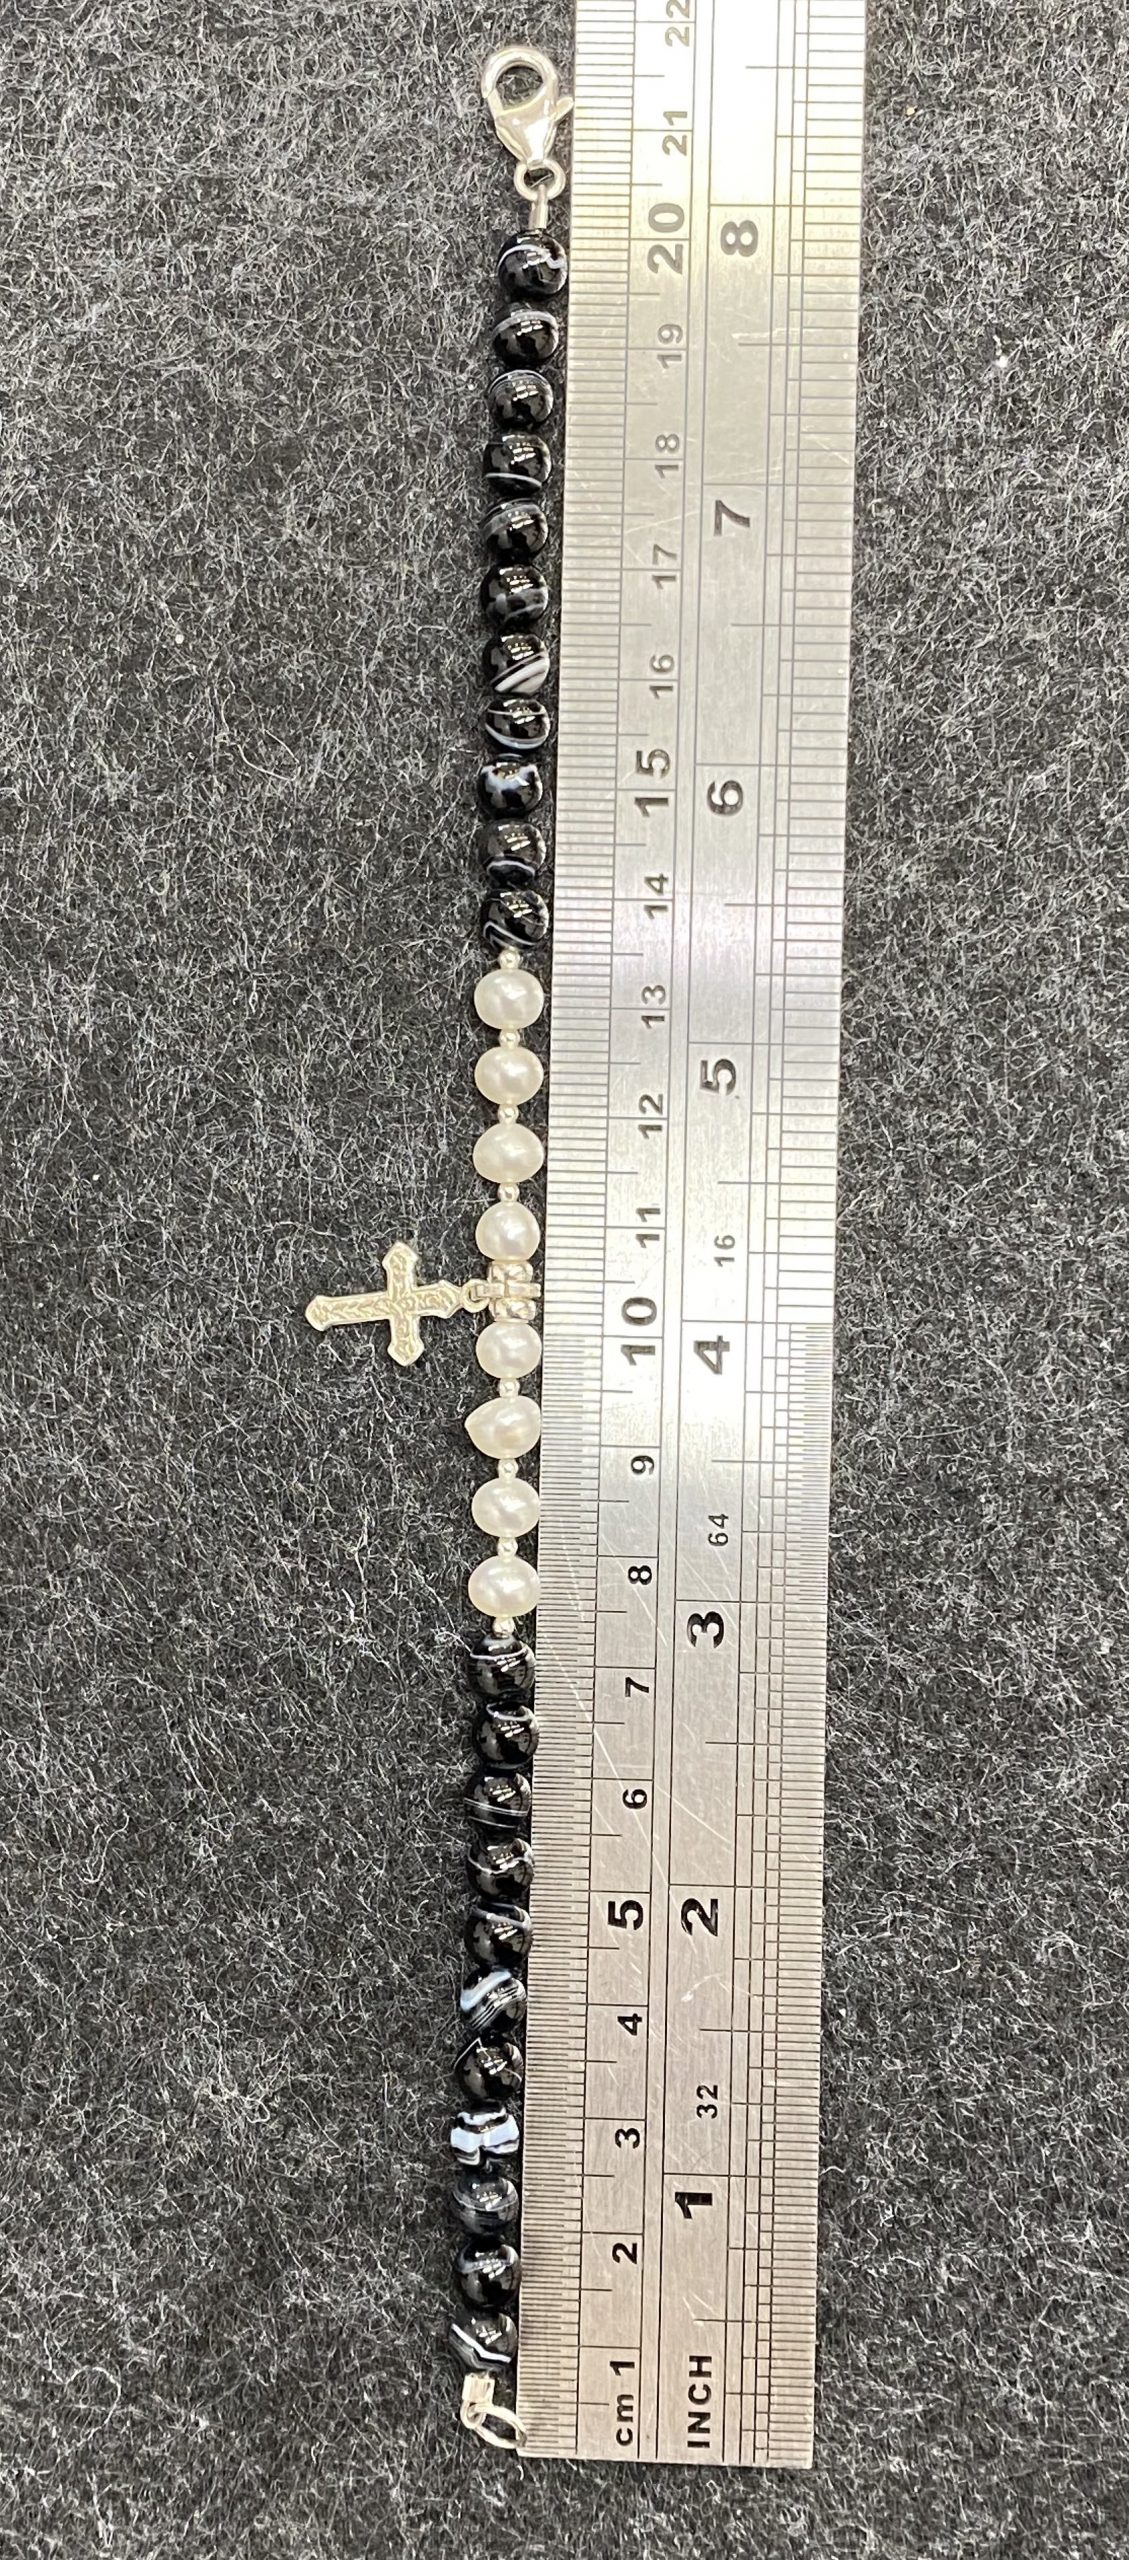 Onyx, Freshwater Pearls & Cross Charm Bracelet